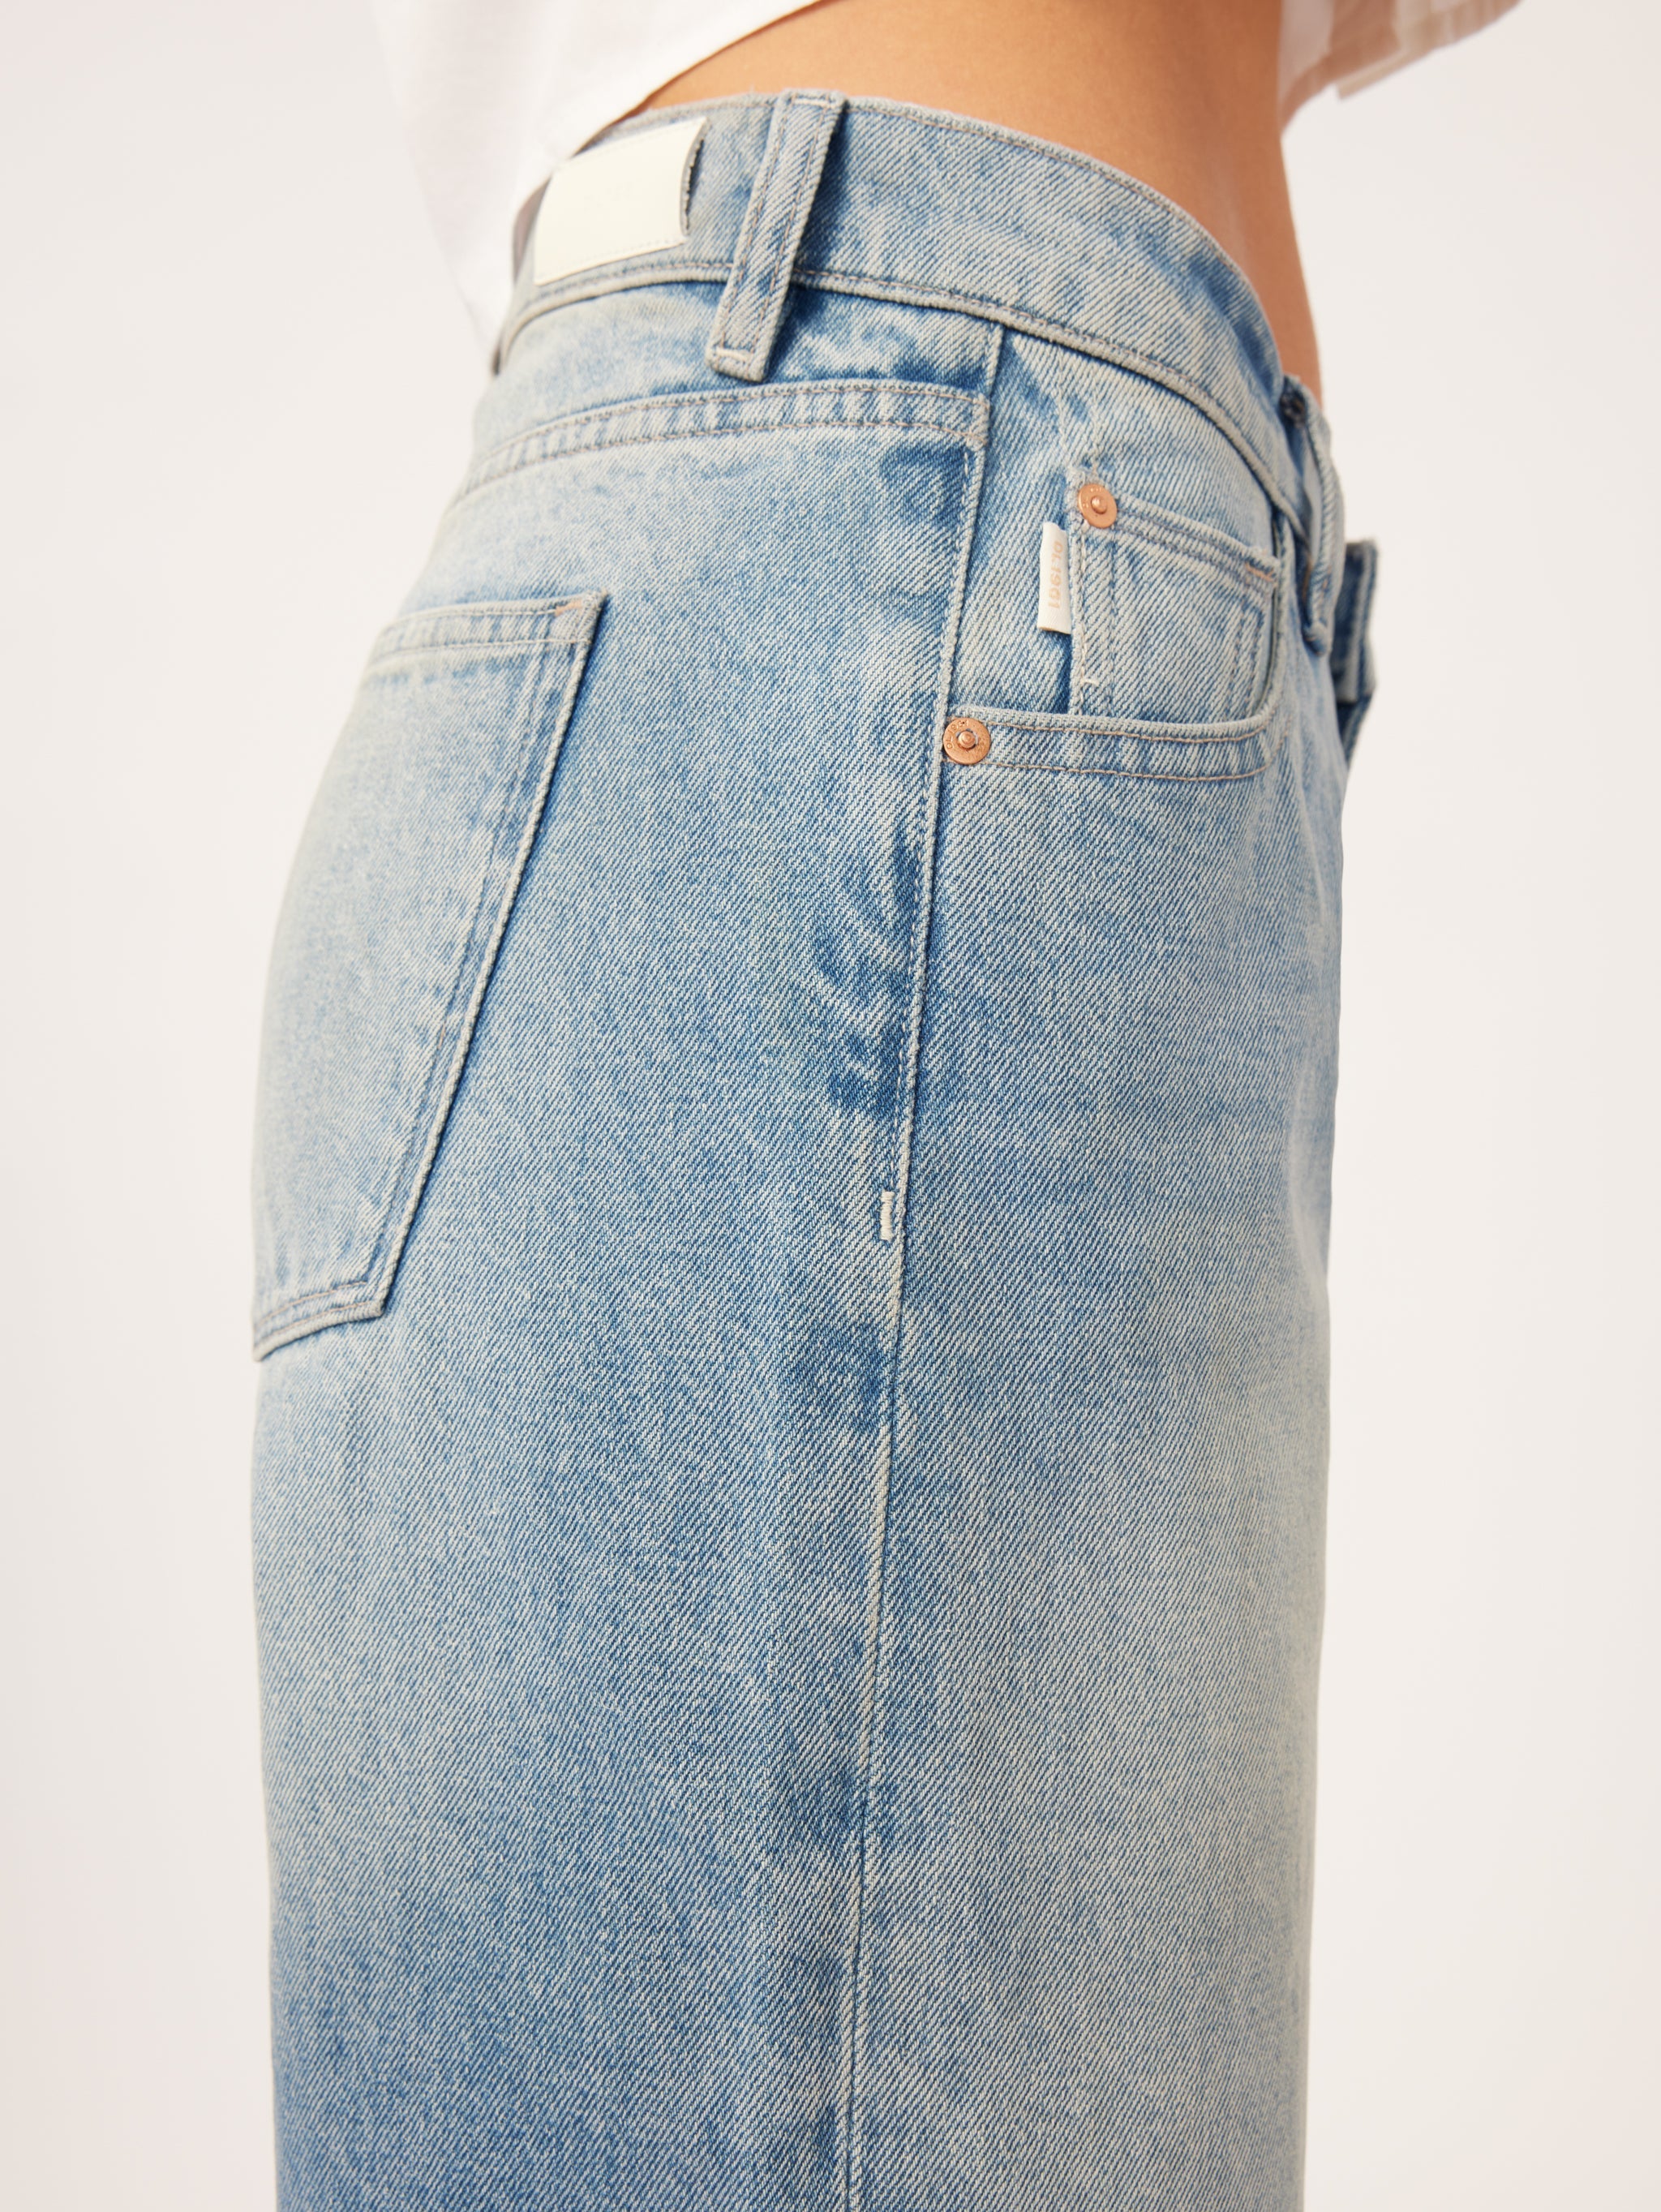 DL1961 Ilia Barrel Jeans - Aged Mid